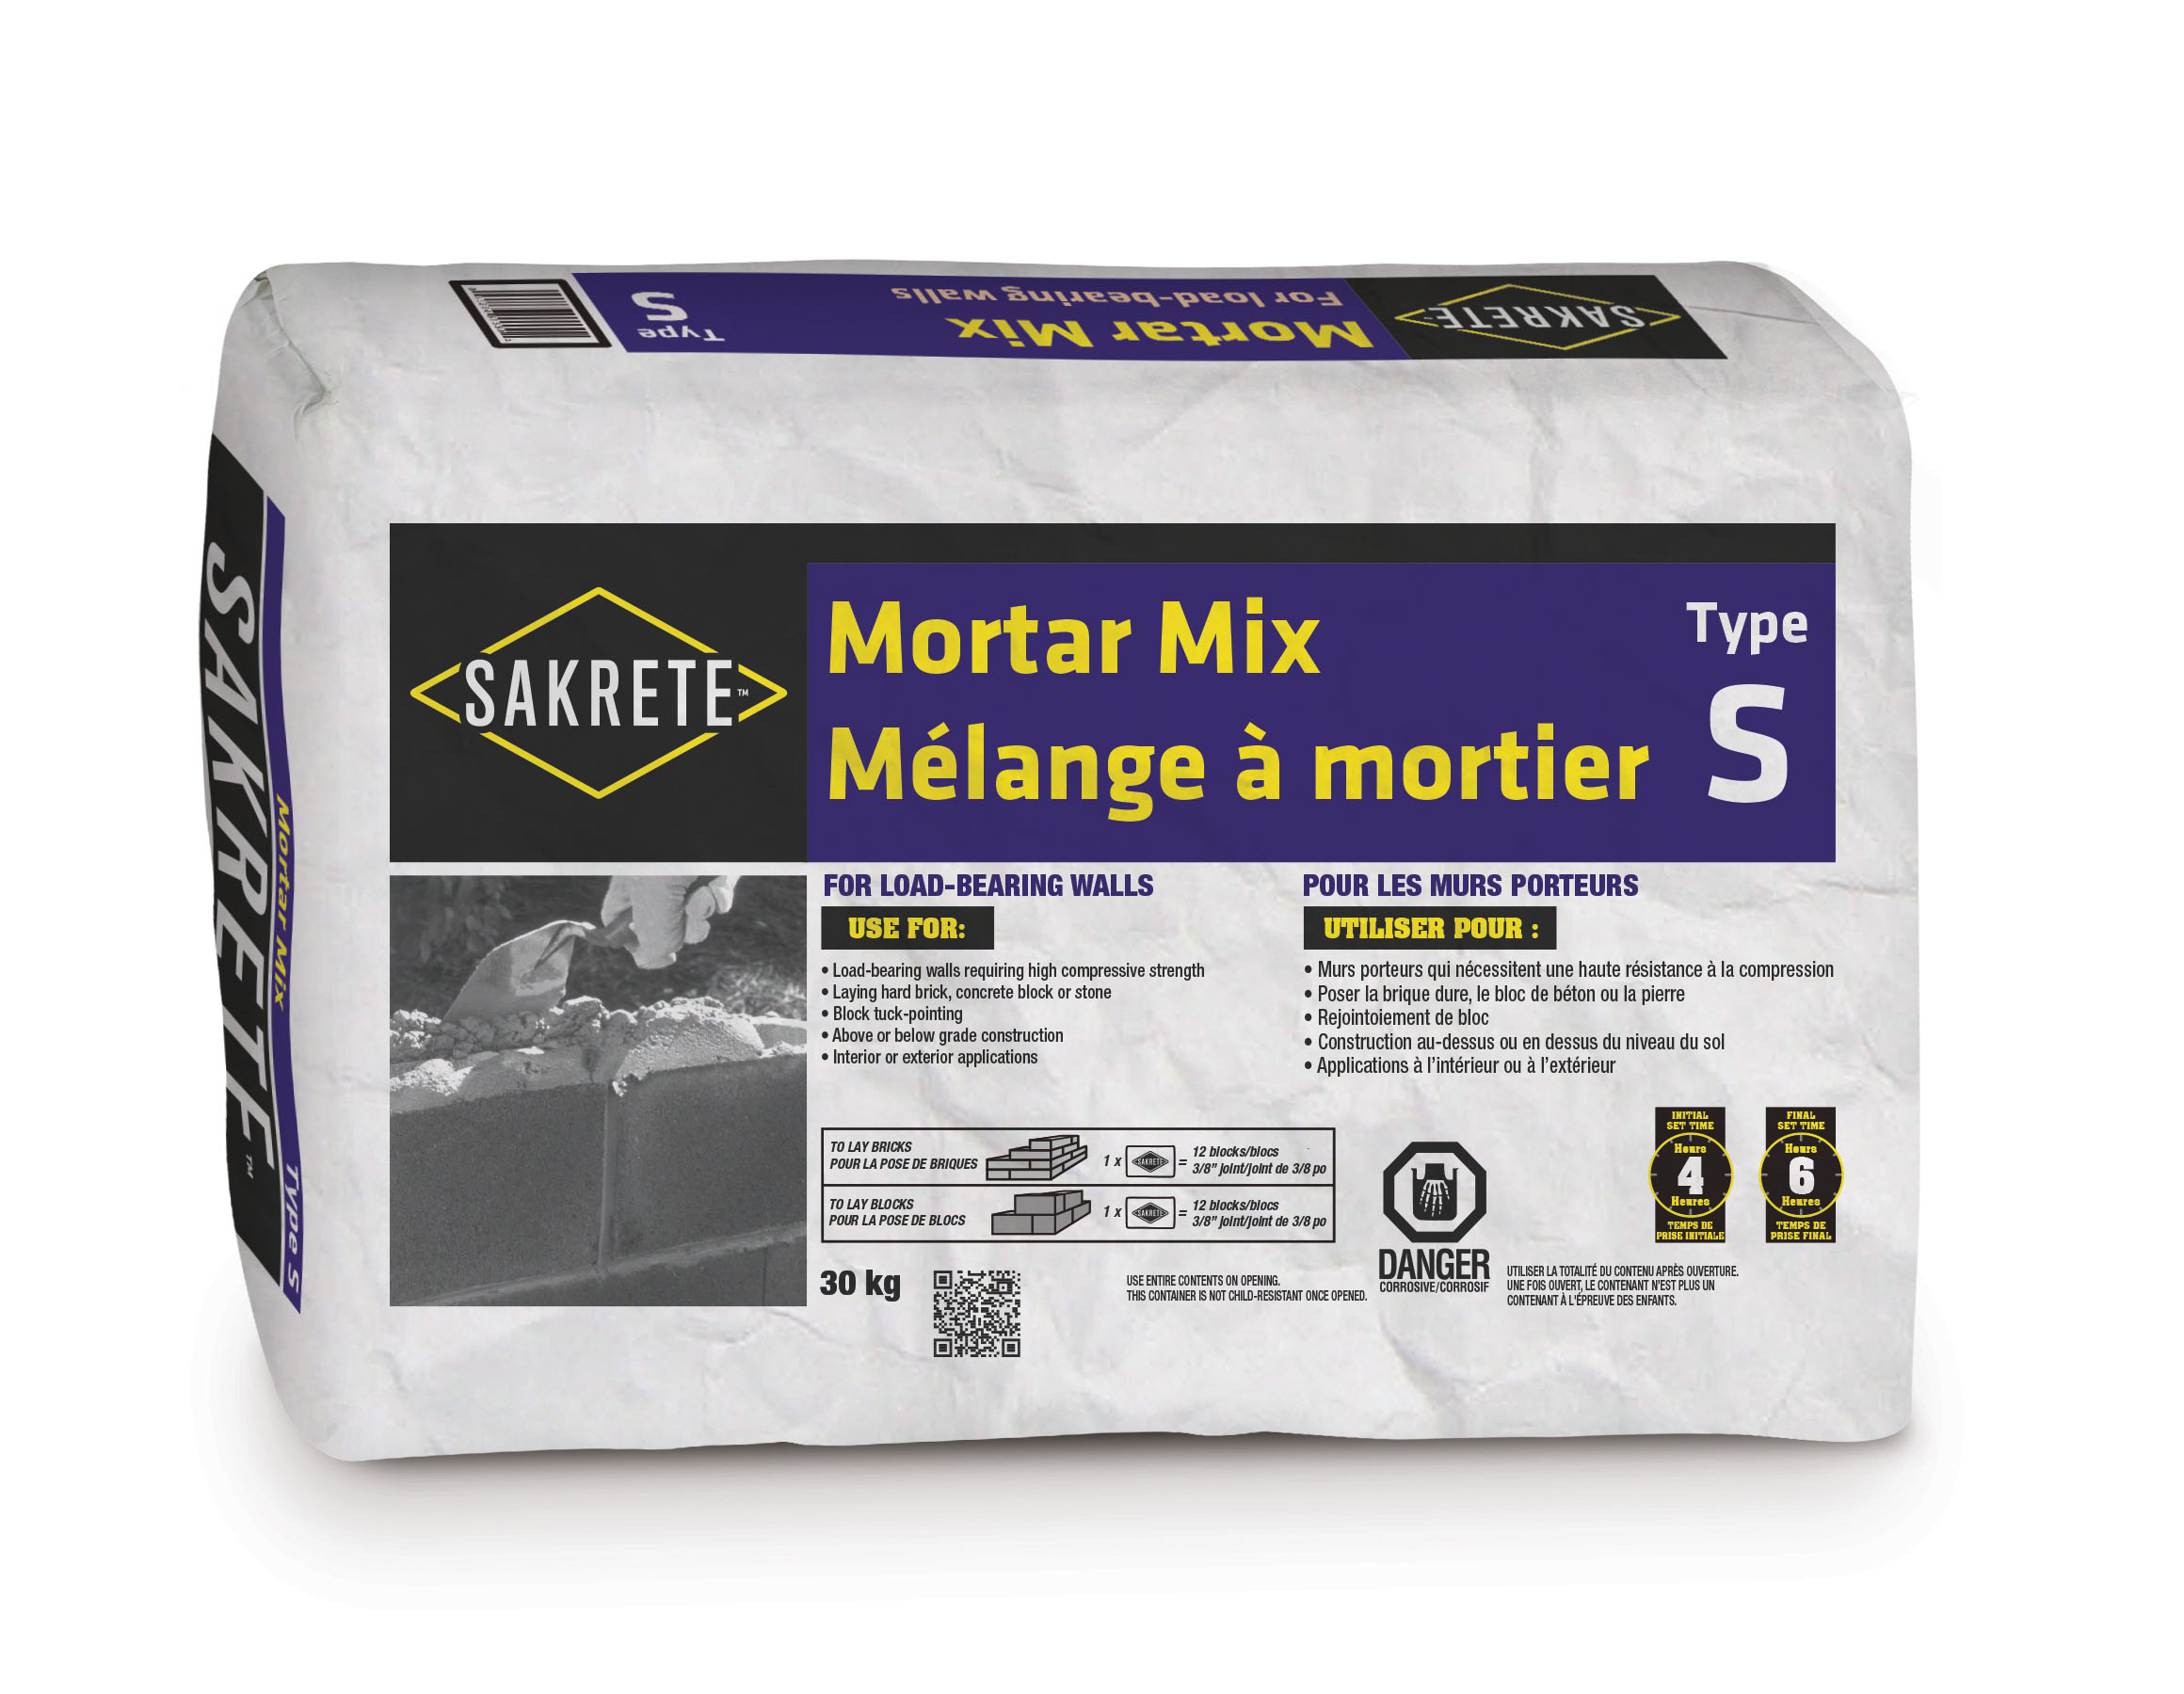 SAKRETE Mortar Mix, Type S > KING Home Improvement Products